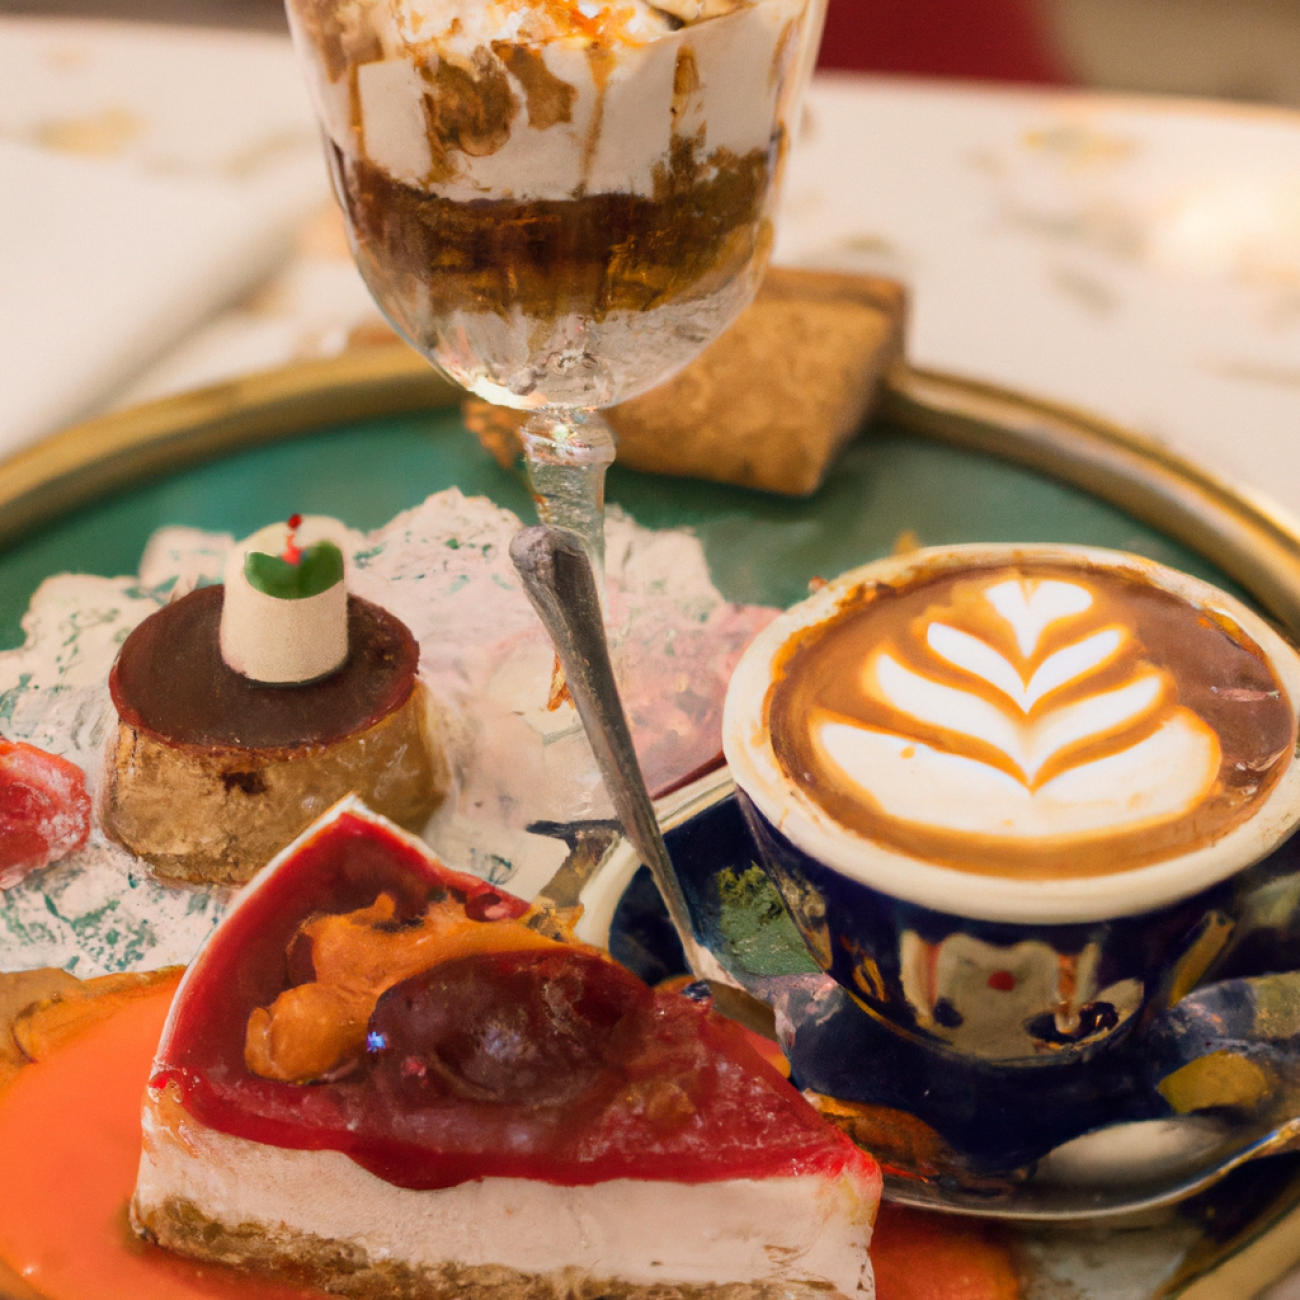 12. Café Trieste: Rodinná kavárna s tradičními Vánočními dezerty